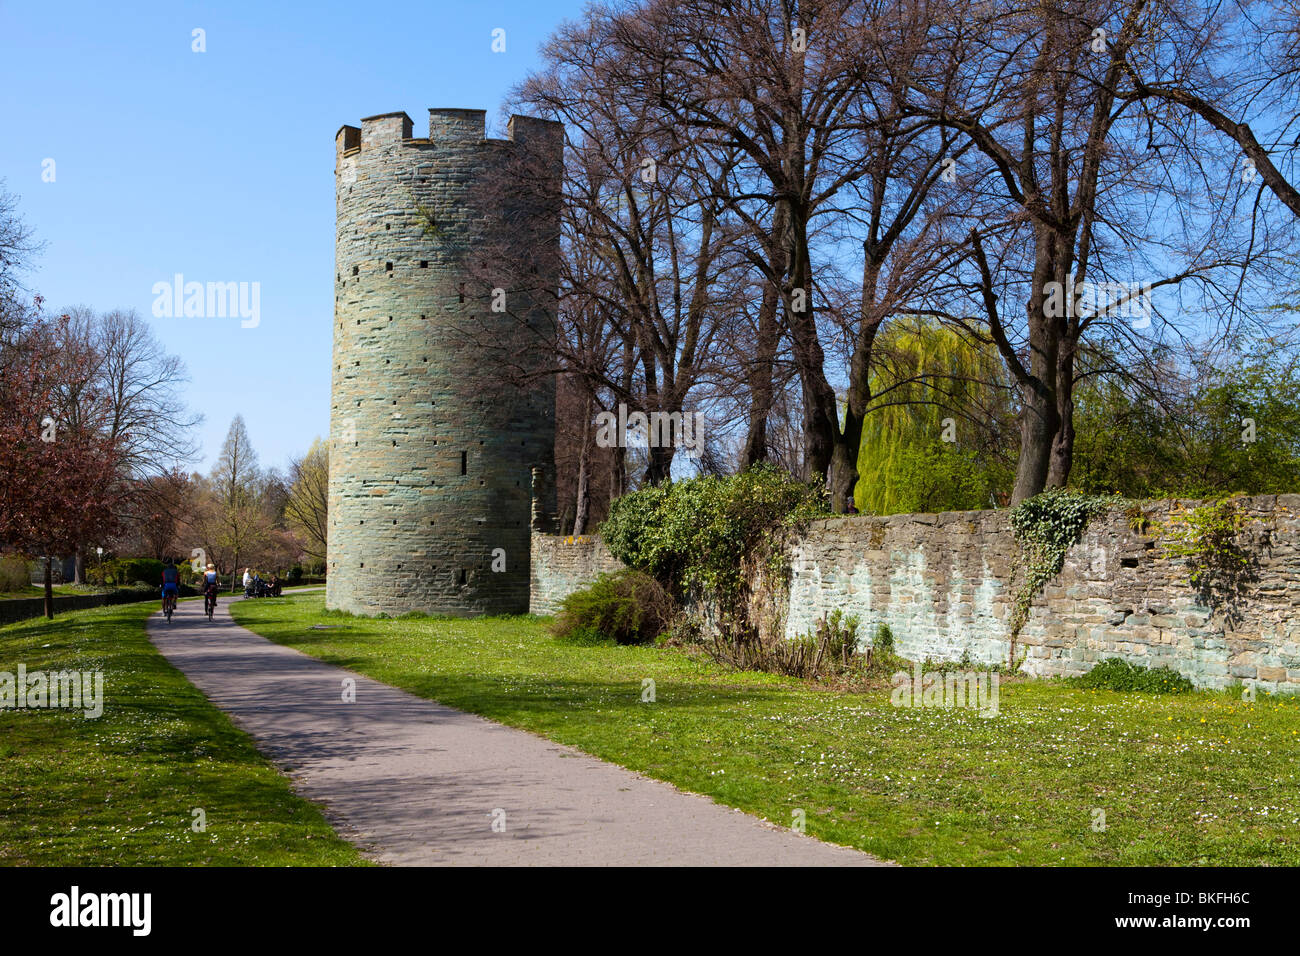 The Kattenturn tower, Soest, North Rhine-Westphalia, Germany, Europe Stock Photo